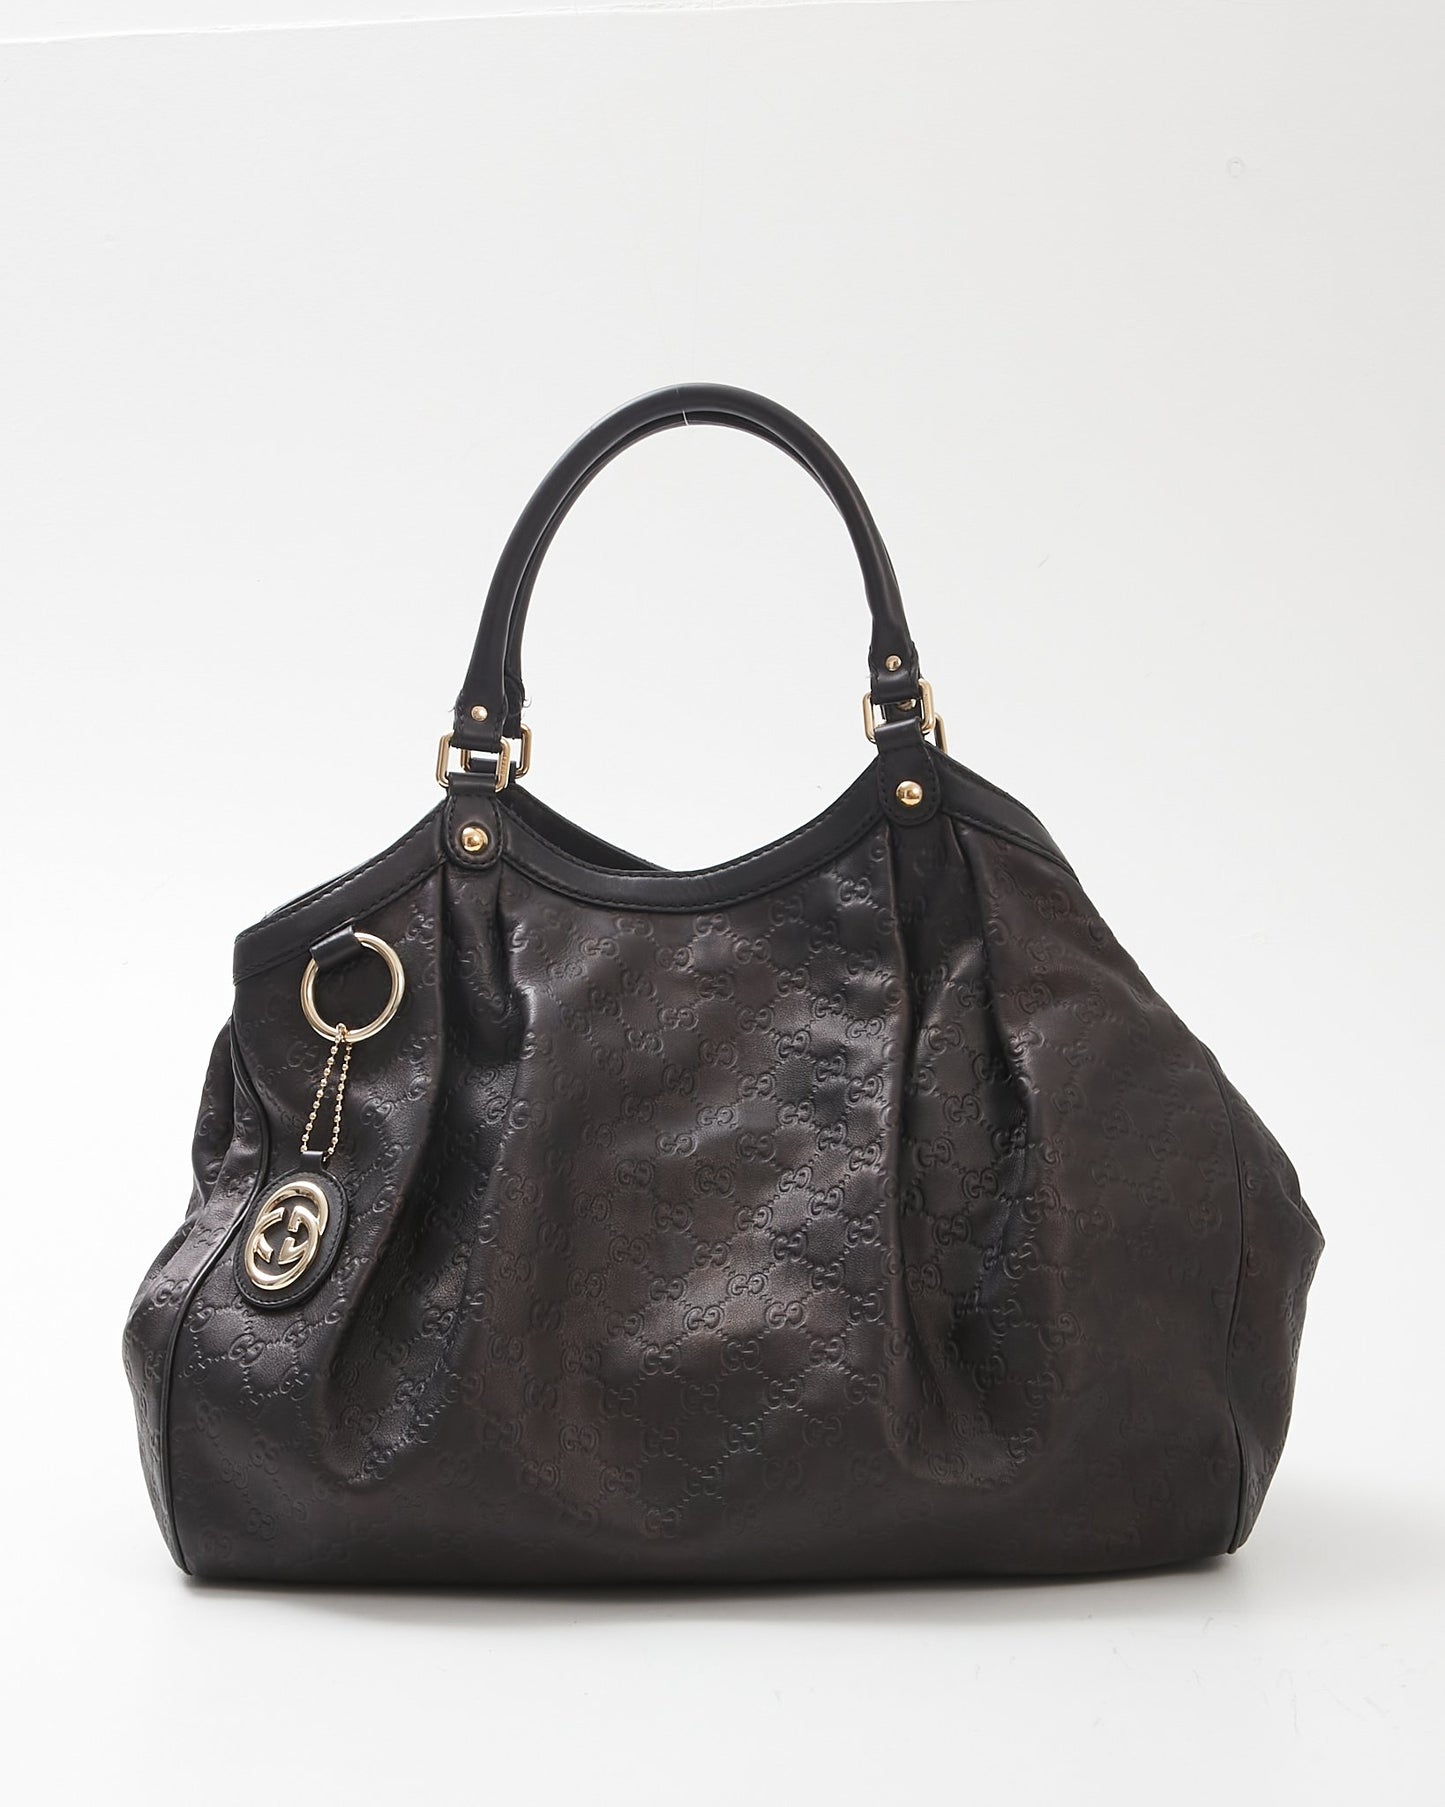 Gucci Black Leather GG Logo Sukey Large Tote Bag